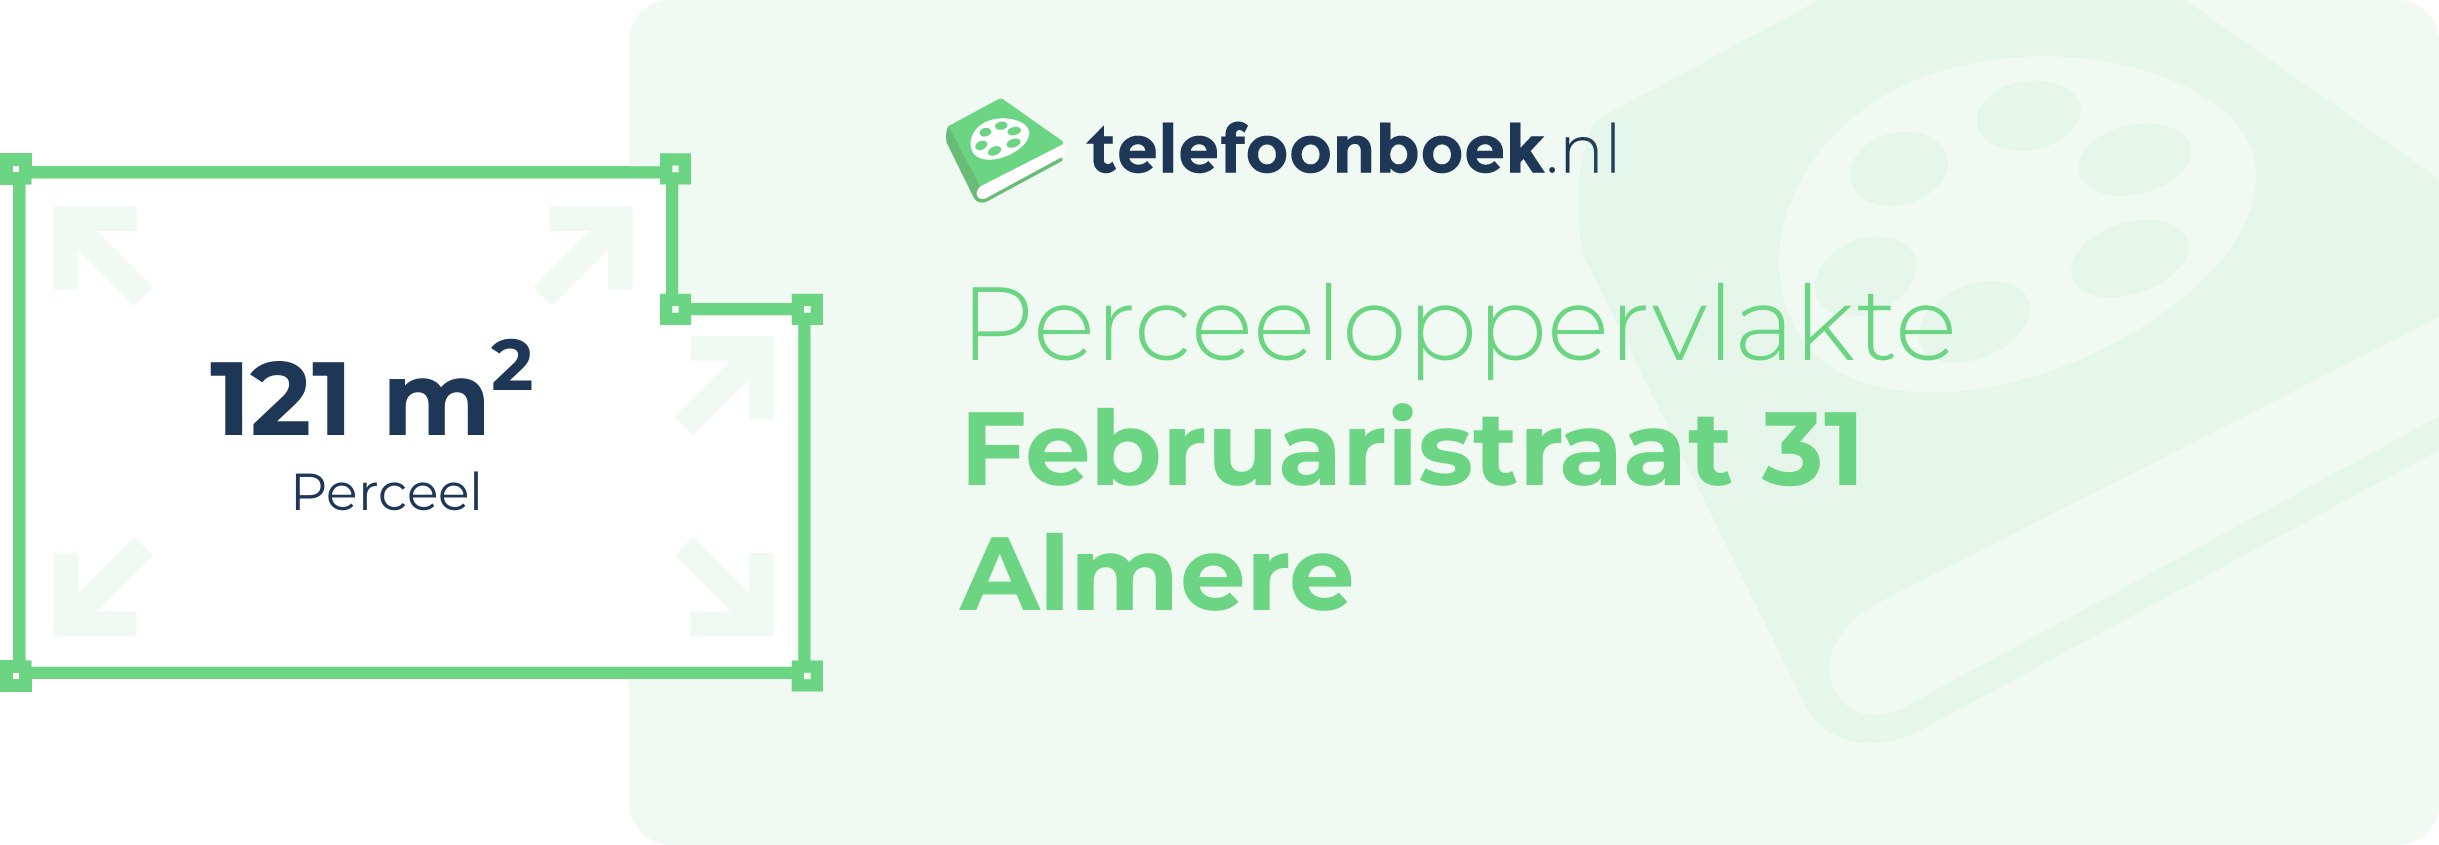 Perceeloppervlakte Februaristraat 31 Almere